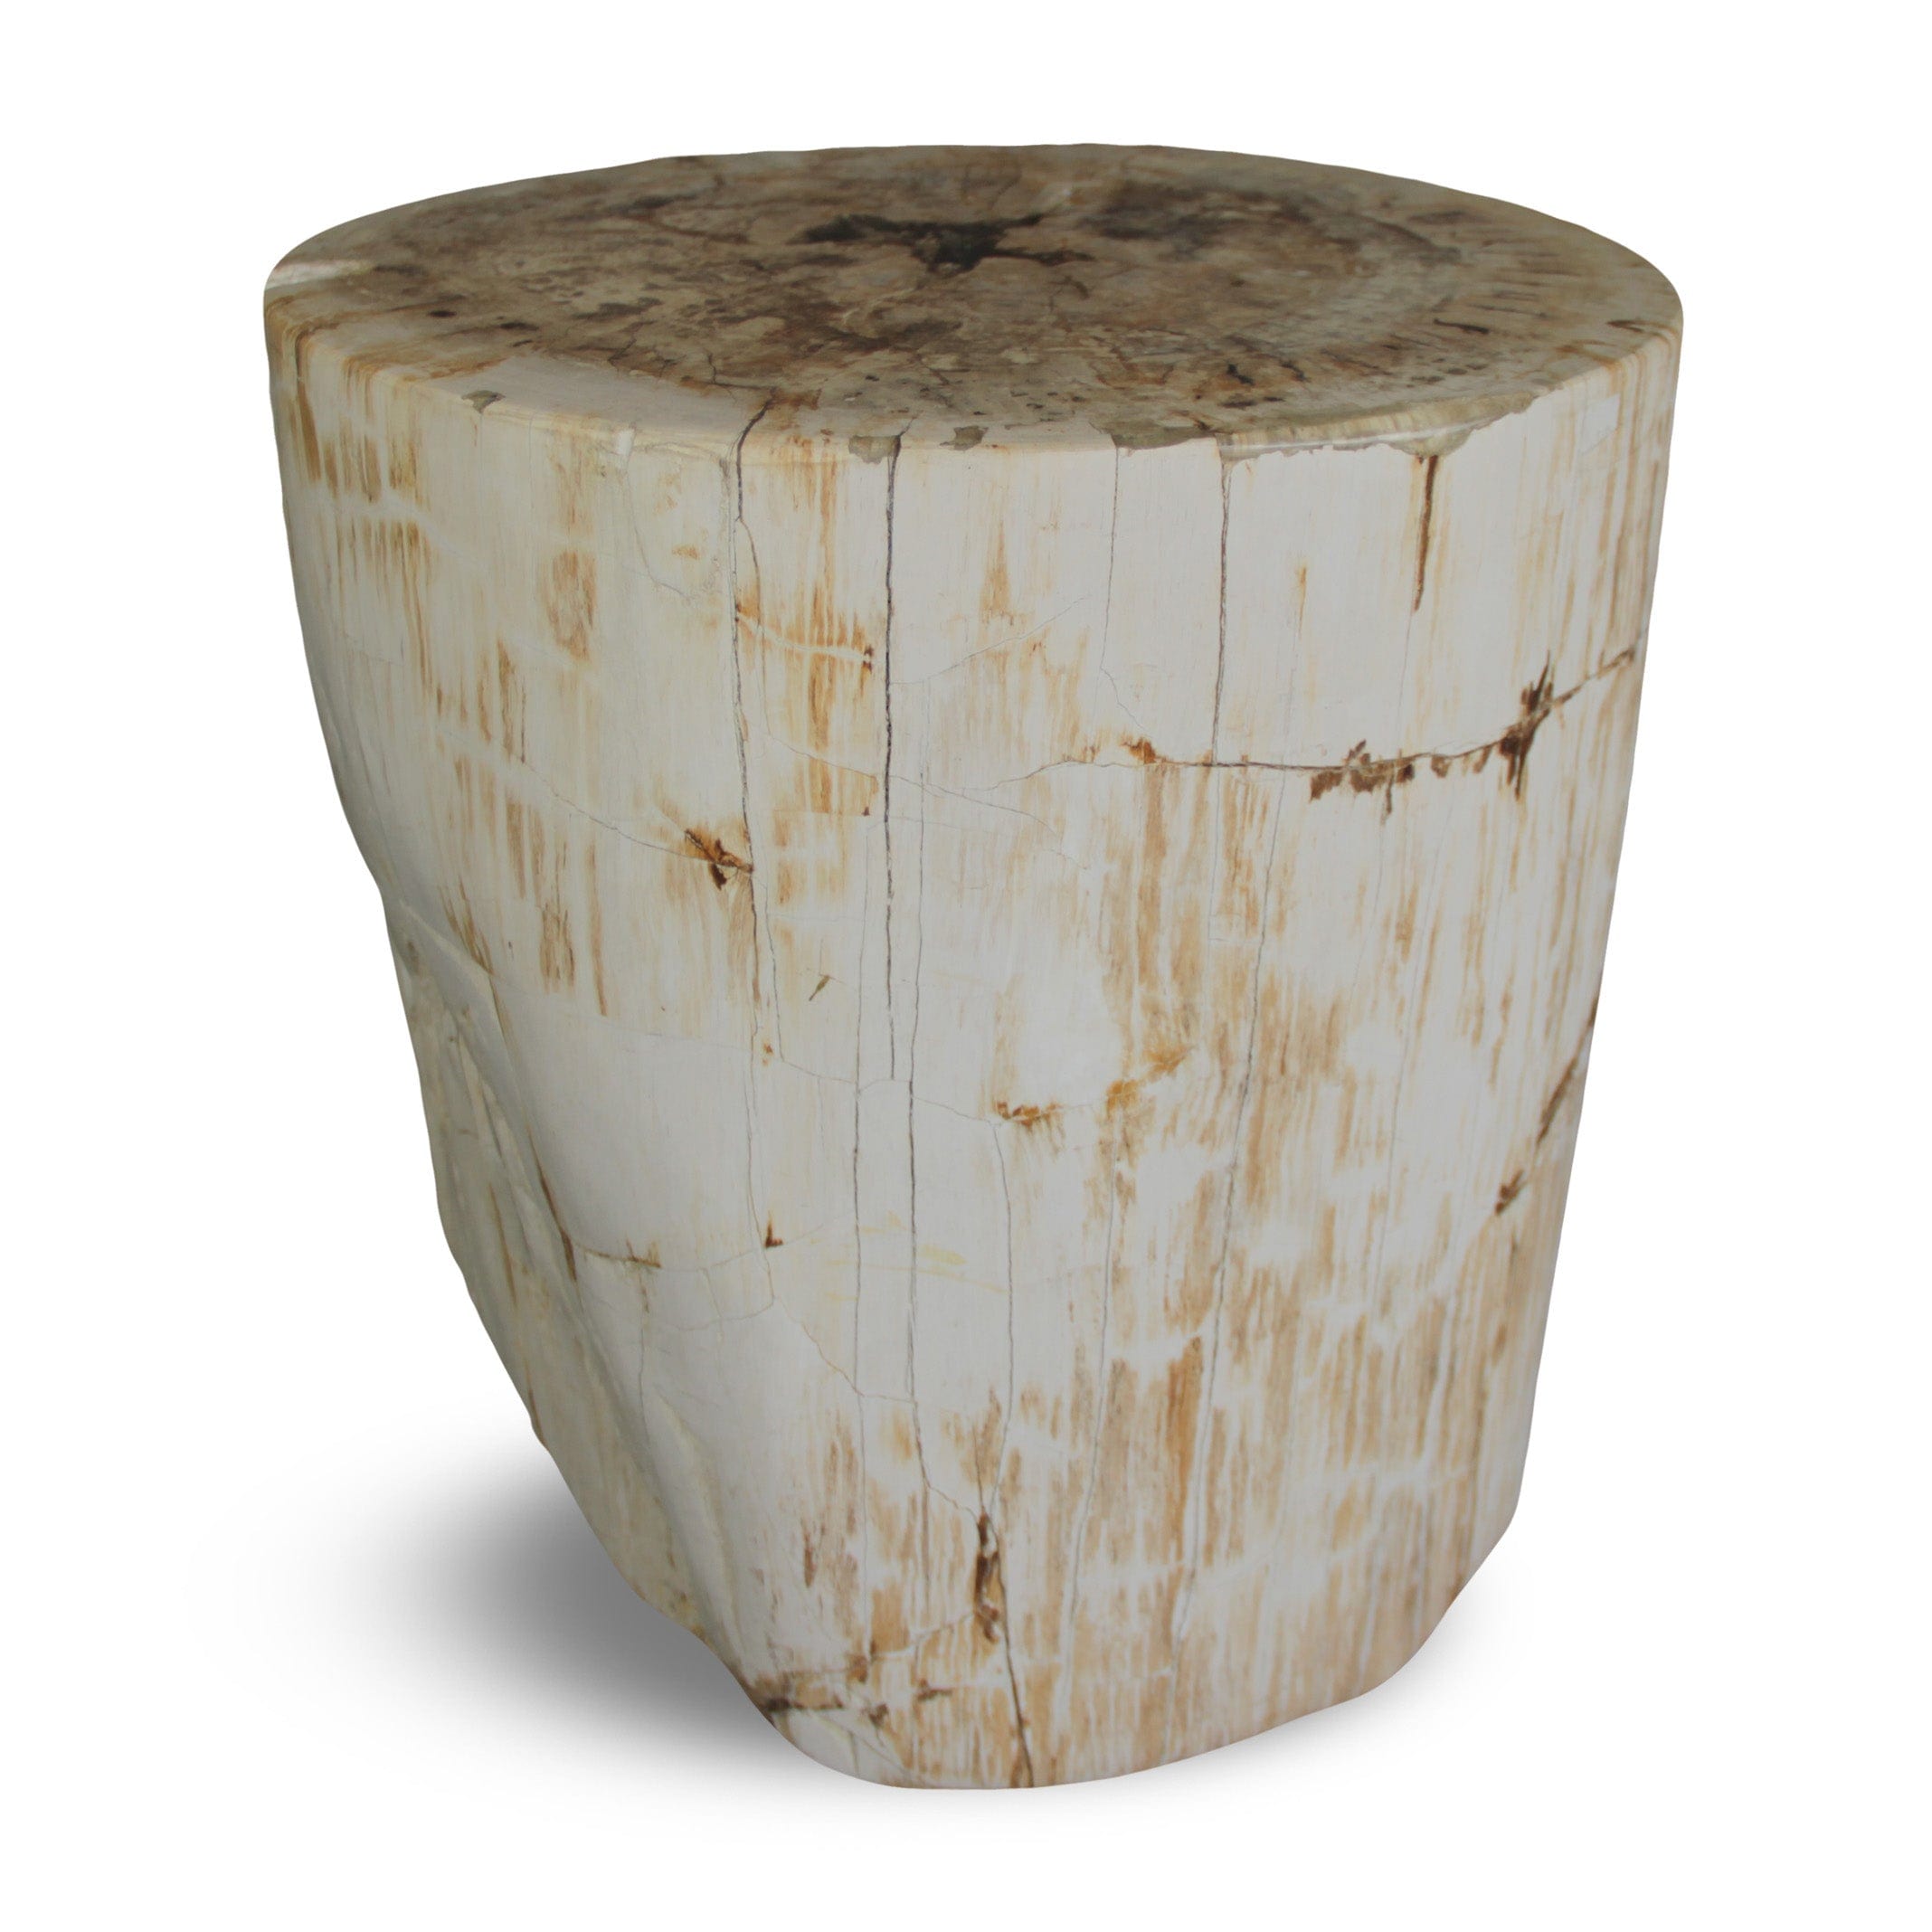 Kalifano Petrified Wood Petrified Wood Round Stump / Stool from Indonesia - 16" / 161 lbs PWS3000.008